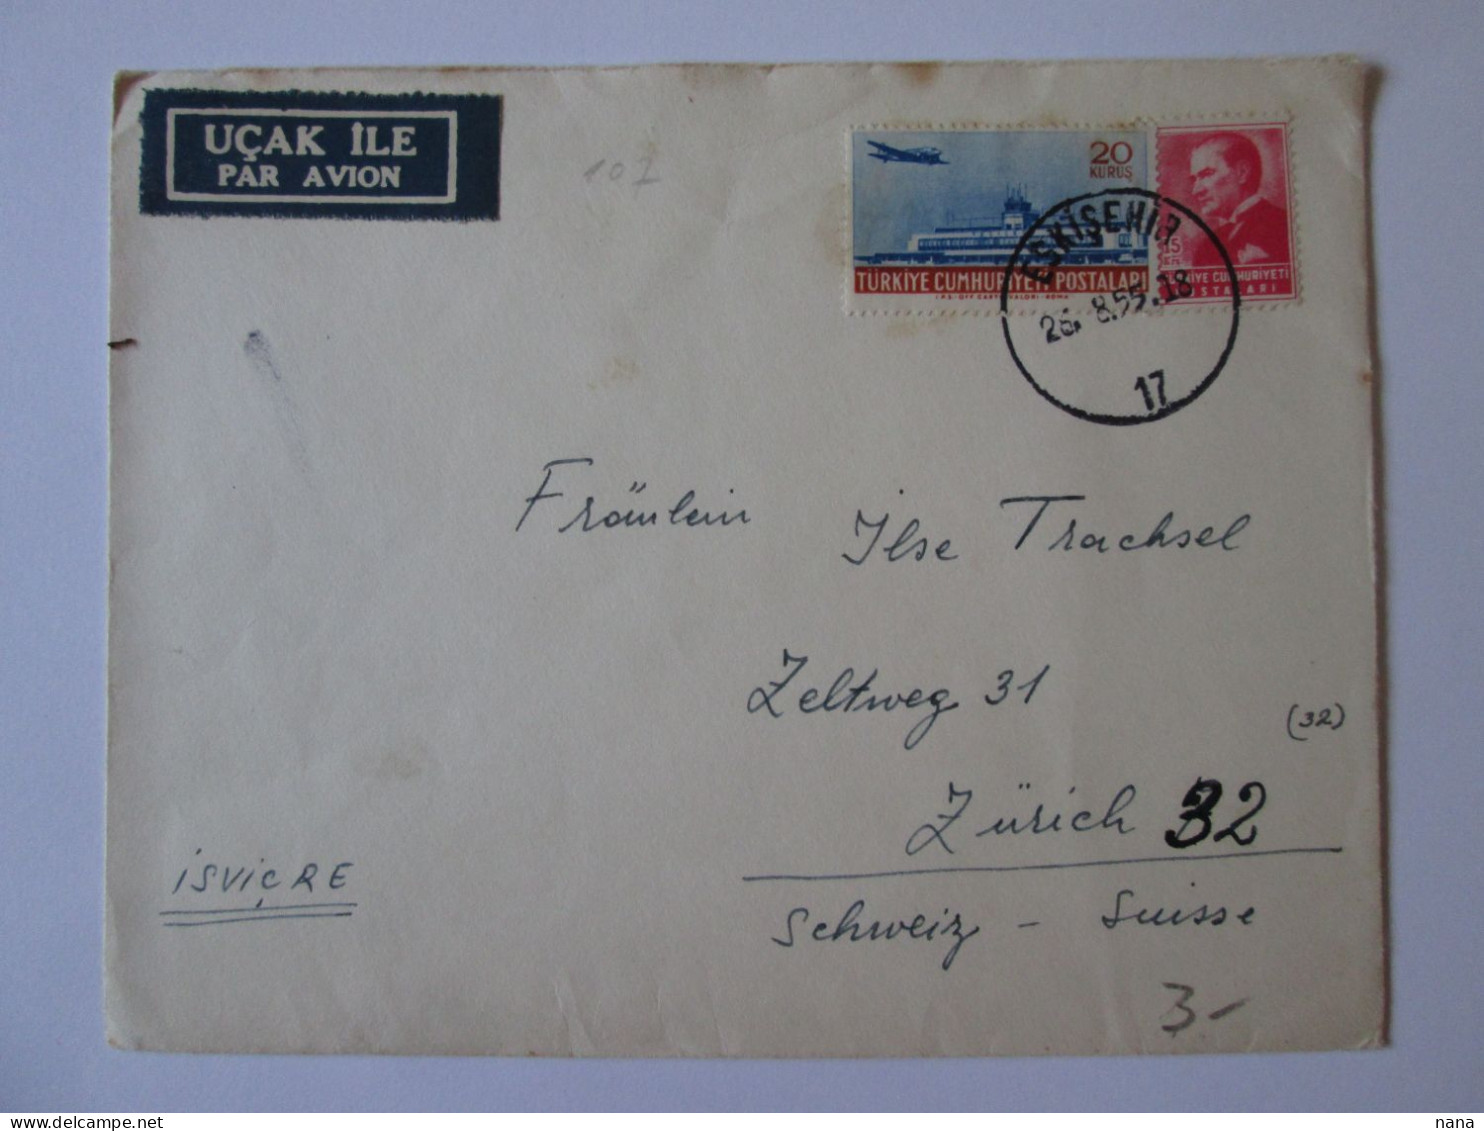 Turquie/Turkey-Eskișehir Enveloppe Recommandee Par Avion 1955/Registered Cover Air Mail 1955 - Lettres & Documents